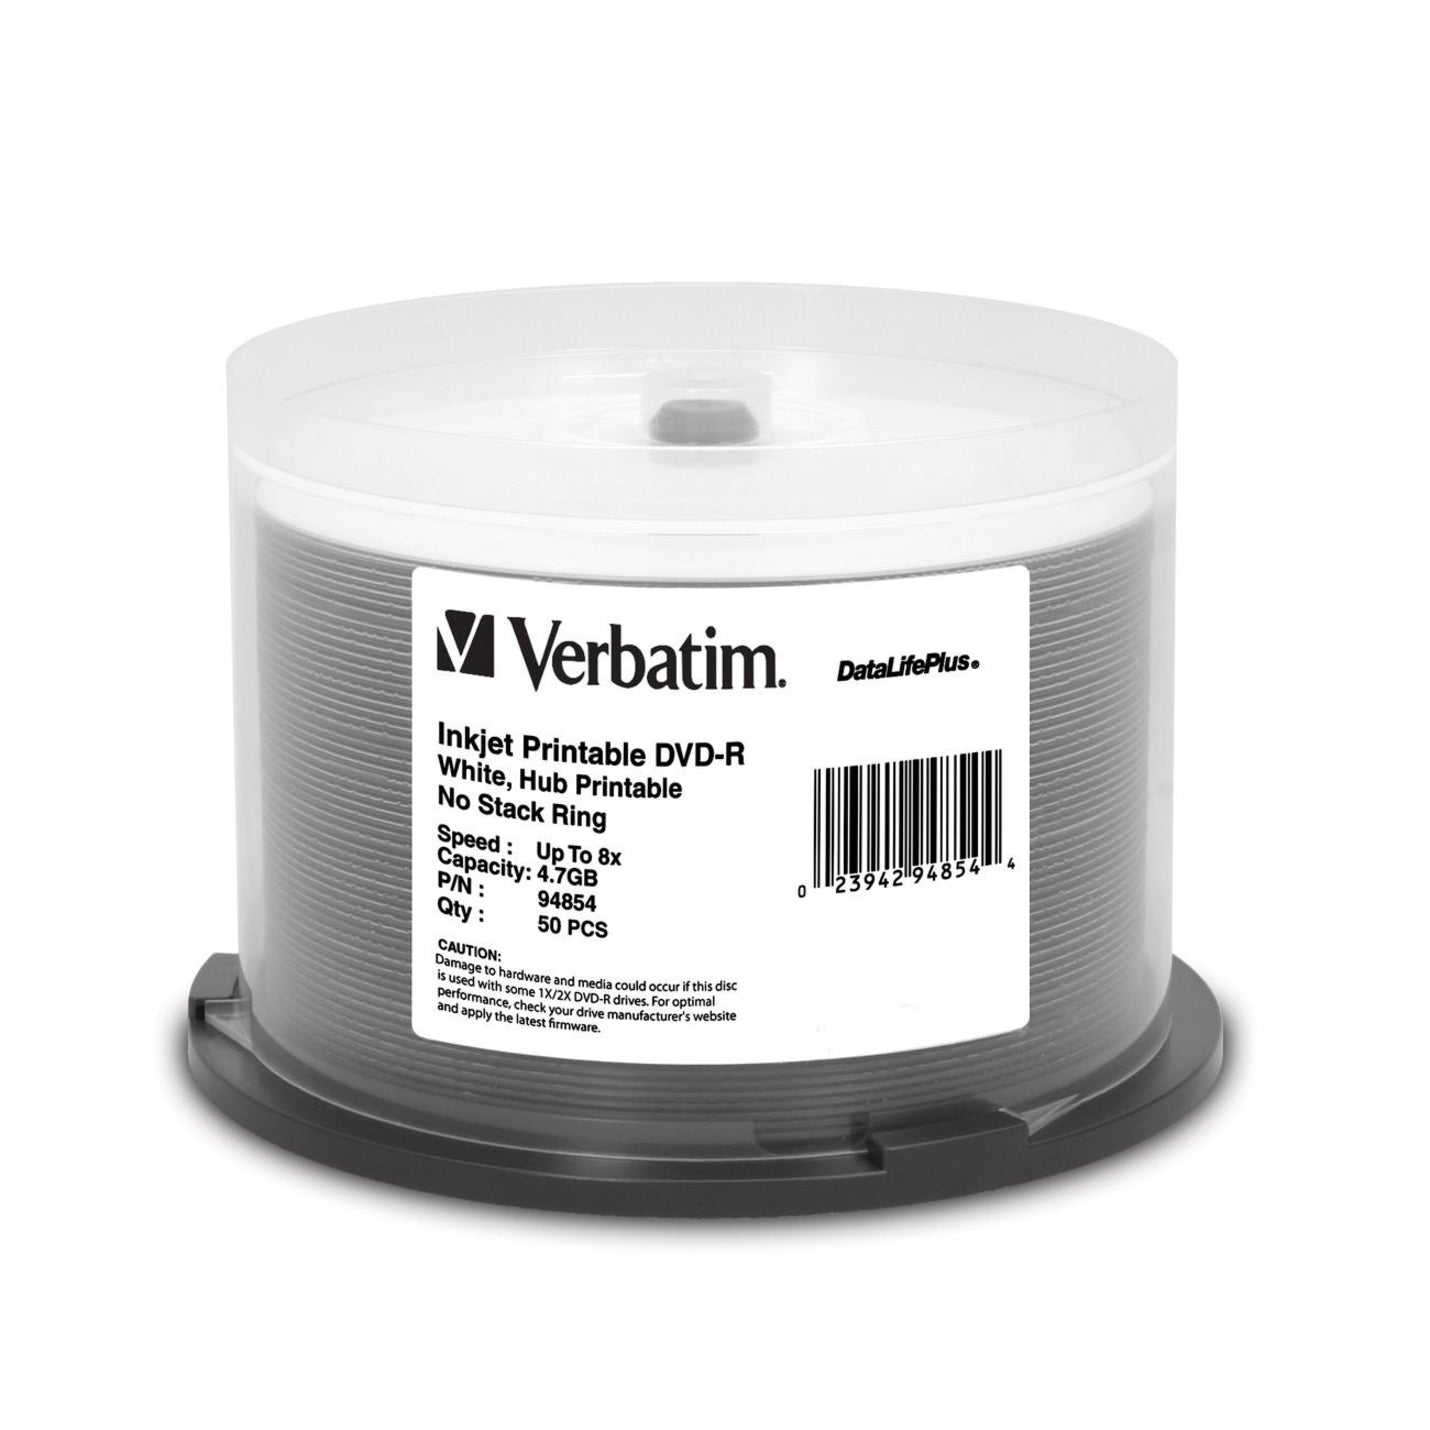 Verbatim 94854 DVD-R 4.7GB 8X DataLifePlus White Inkjet Printable, Hub Printable - 50pk Spindle